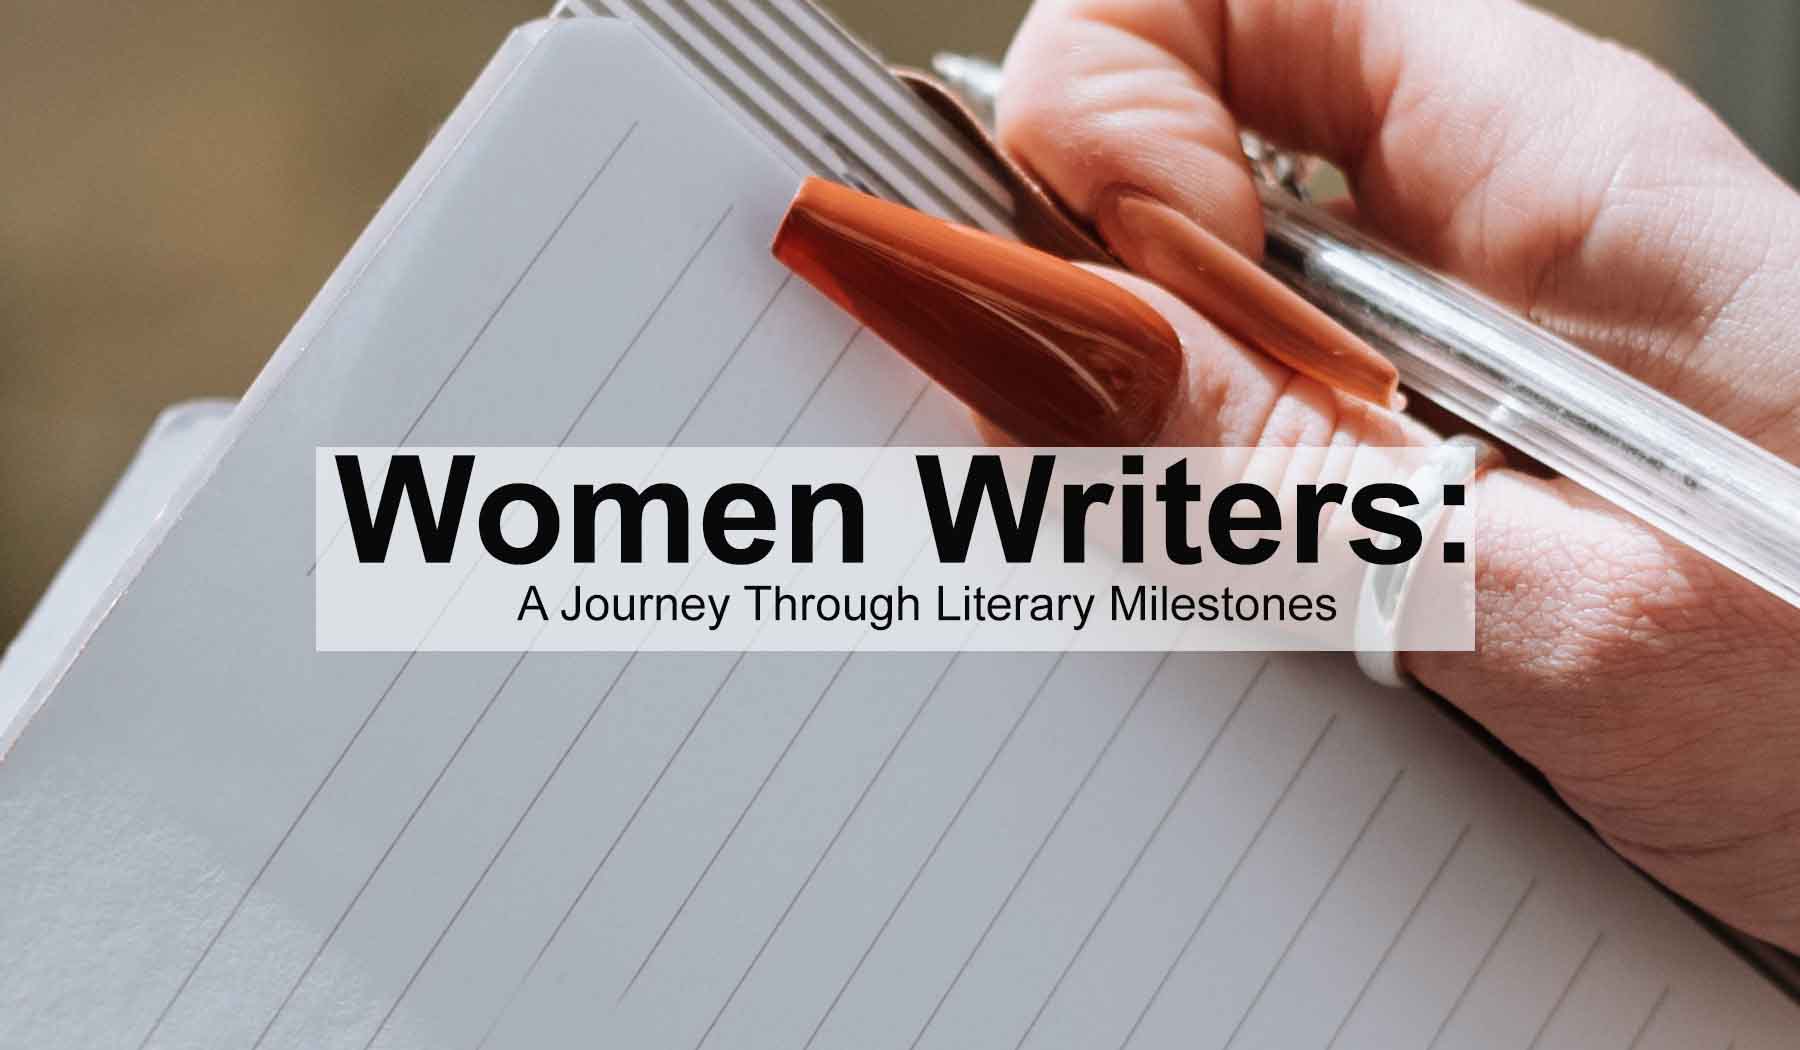 Celebrating Women Writers